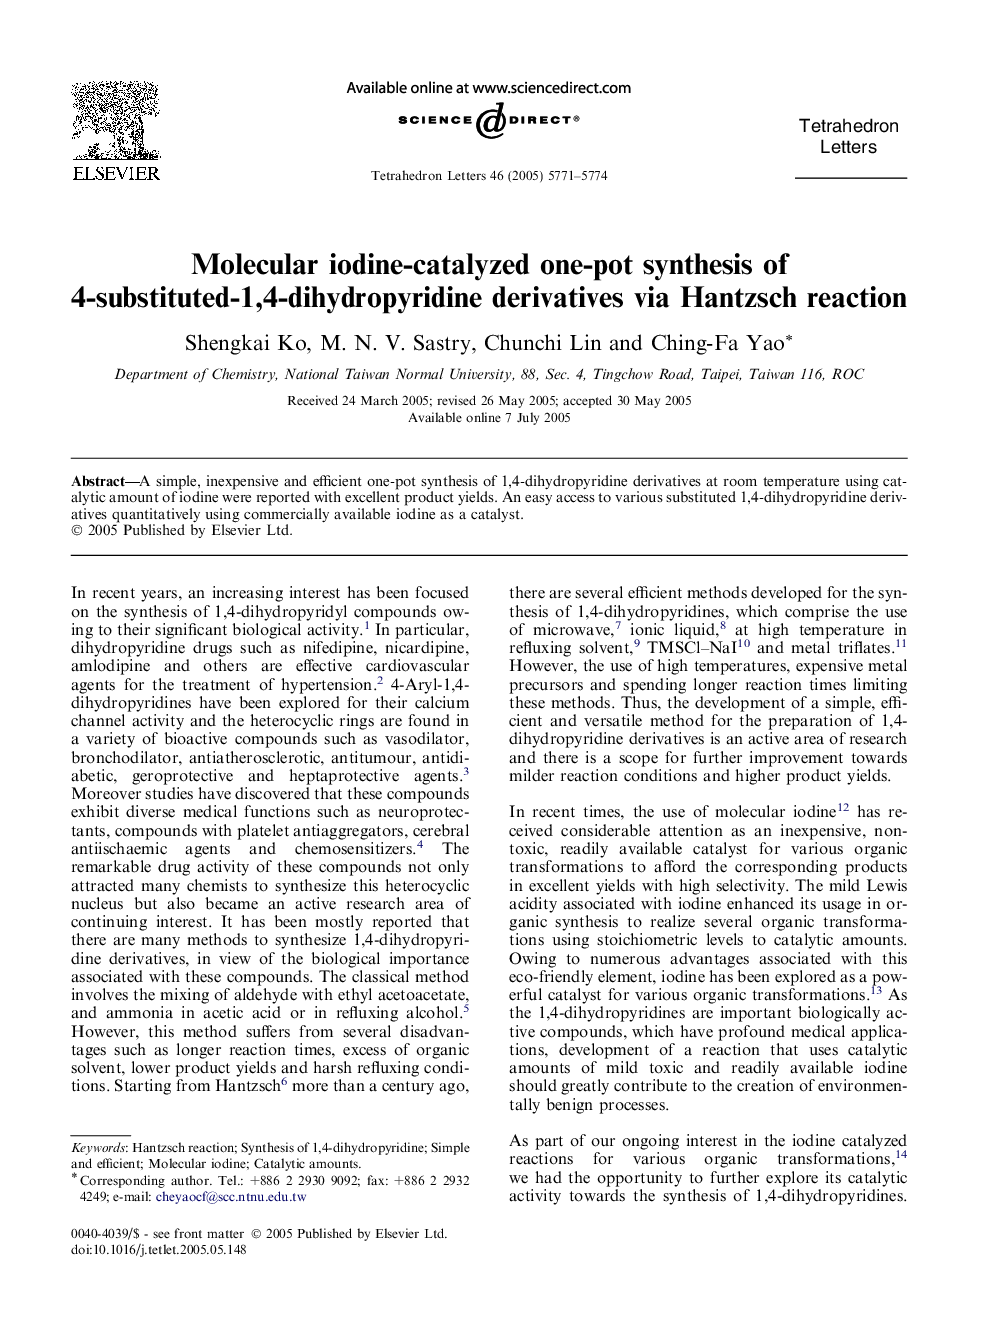 Molecular iodine-catalyzed one-pot synthesis of 4-substituted-1,4-dihydropyridine derivatives via Hantzsch reaction